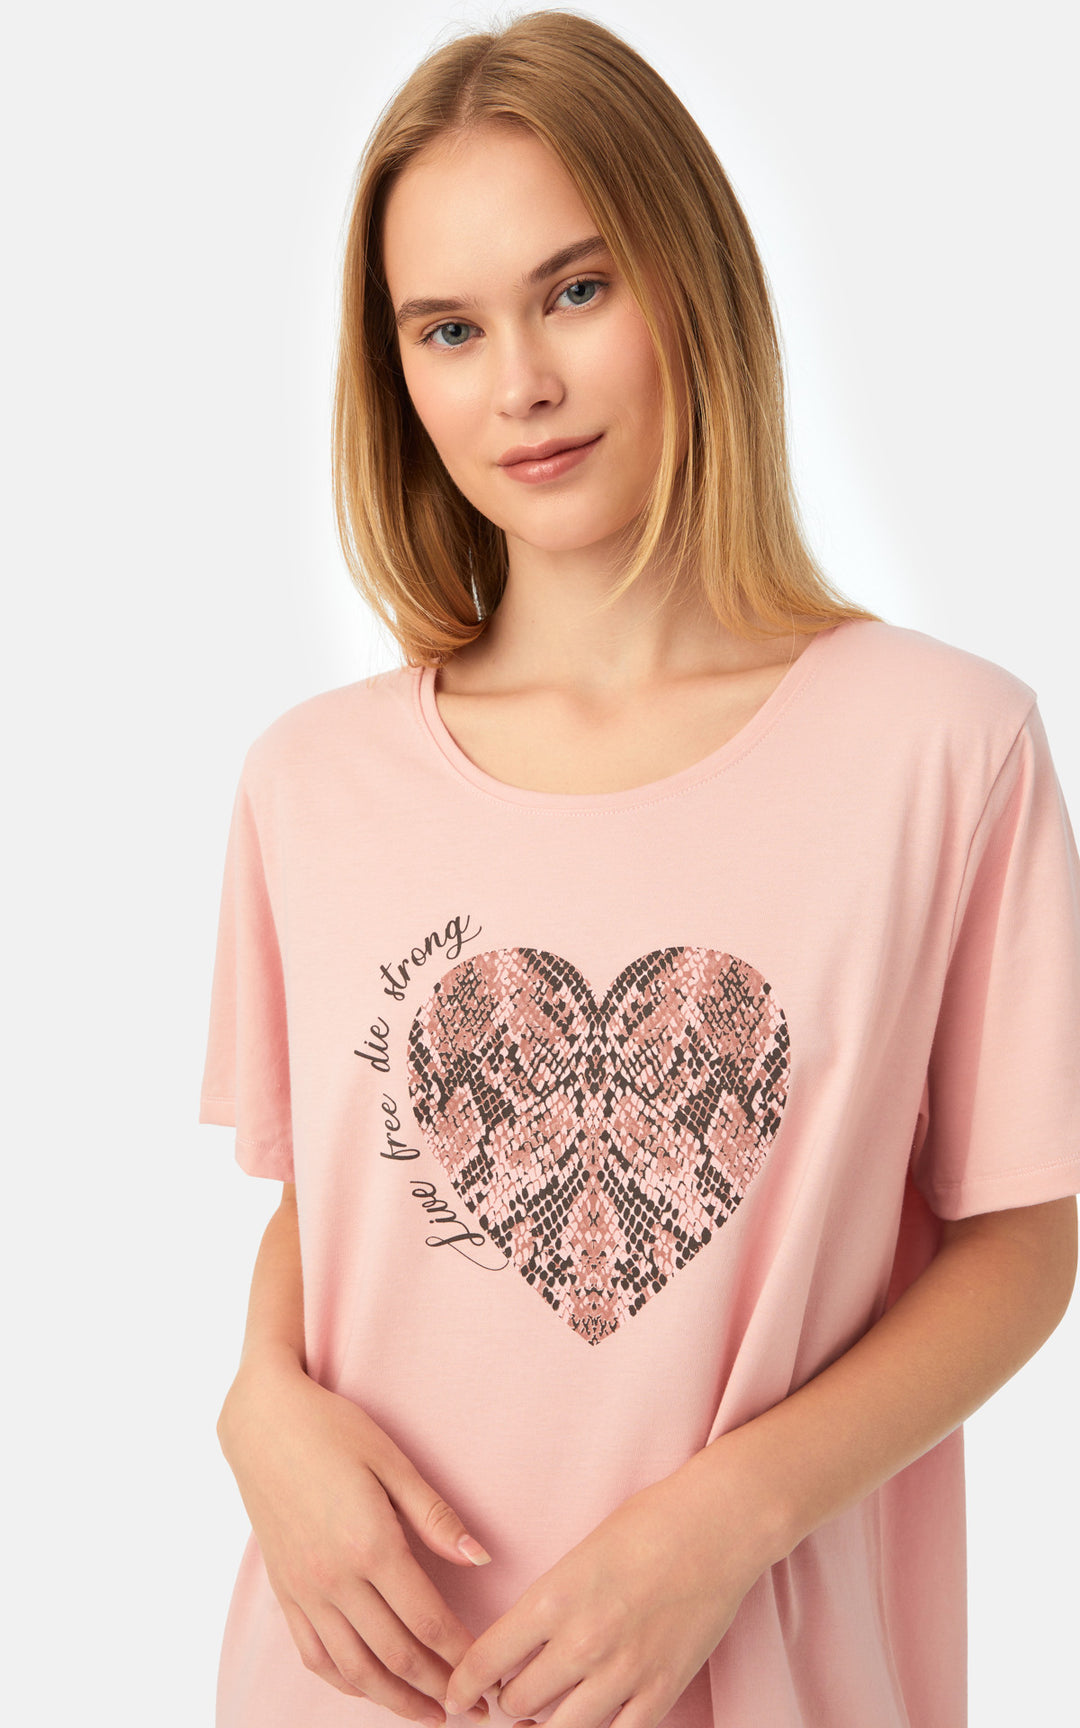 Hearts Boyfriend T-Shirt Dress